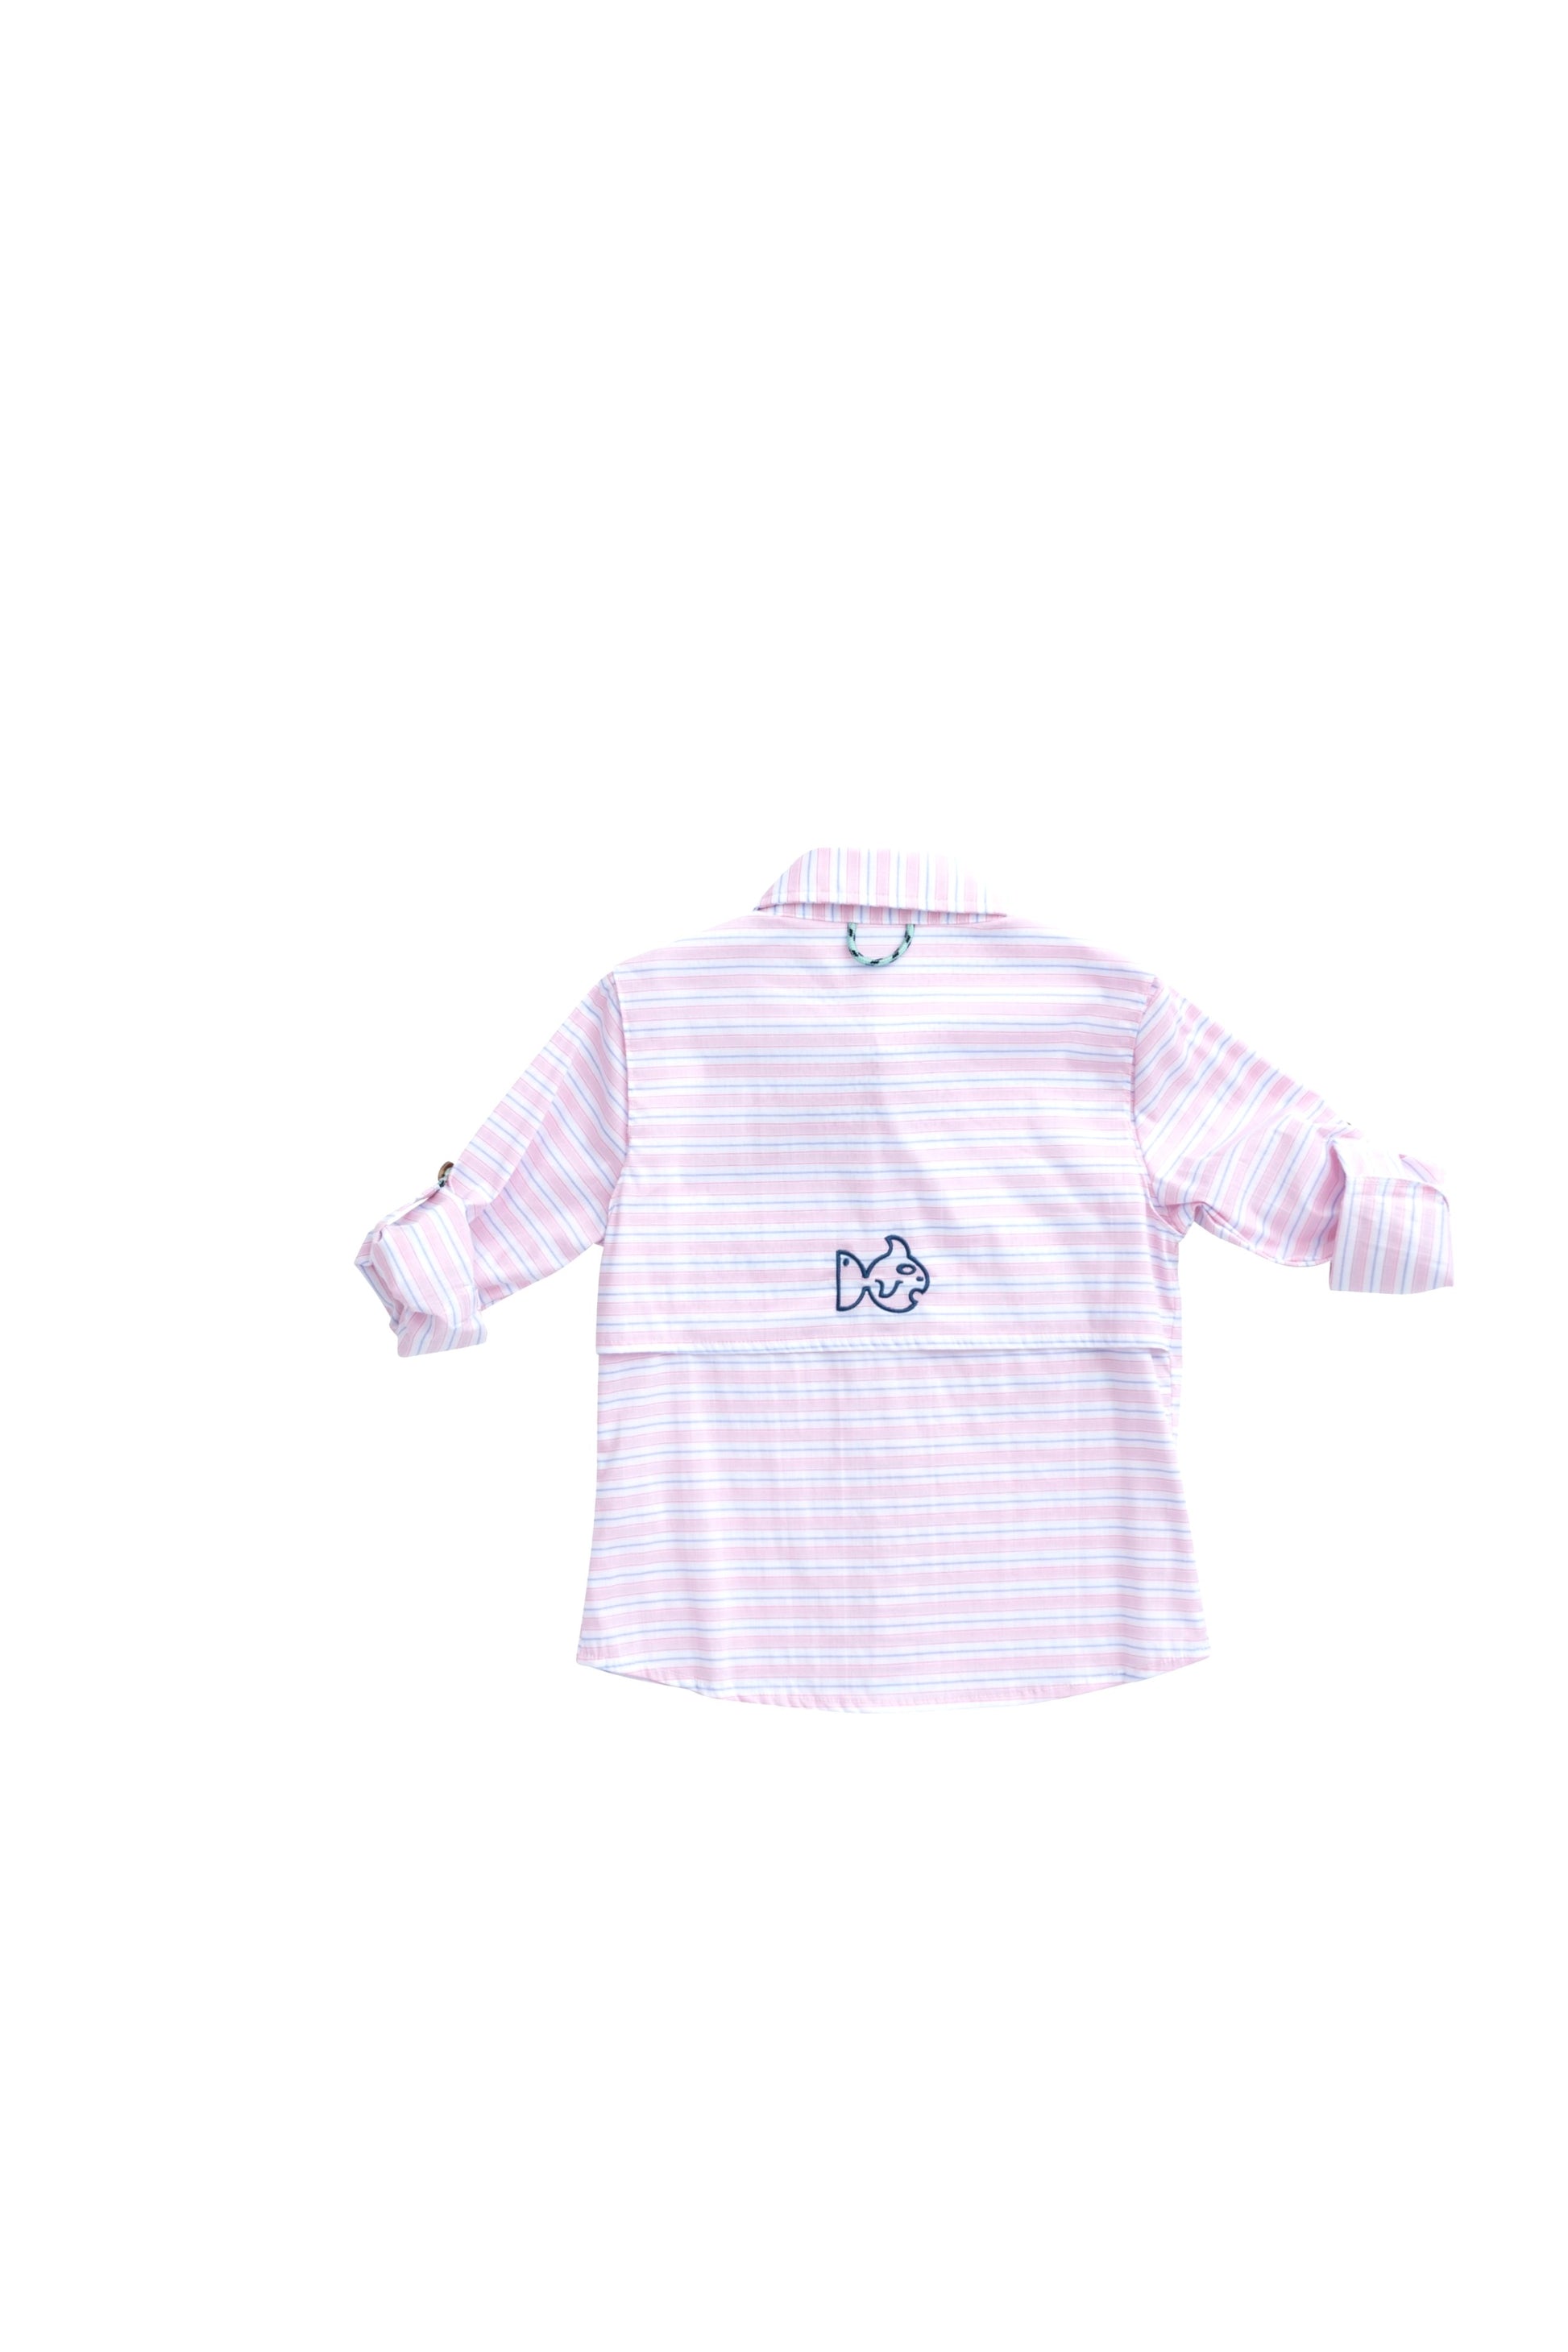 Striped Fishing Shirt  - Doodlebug's Children's Boutique